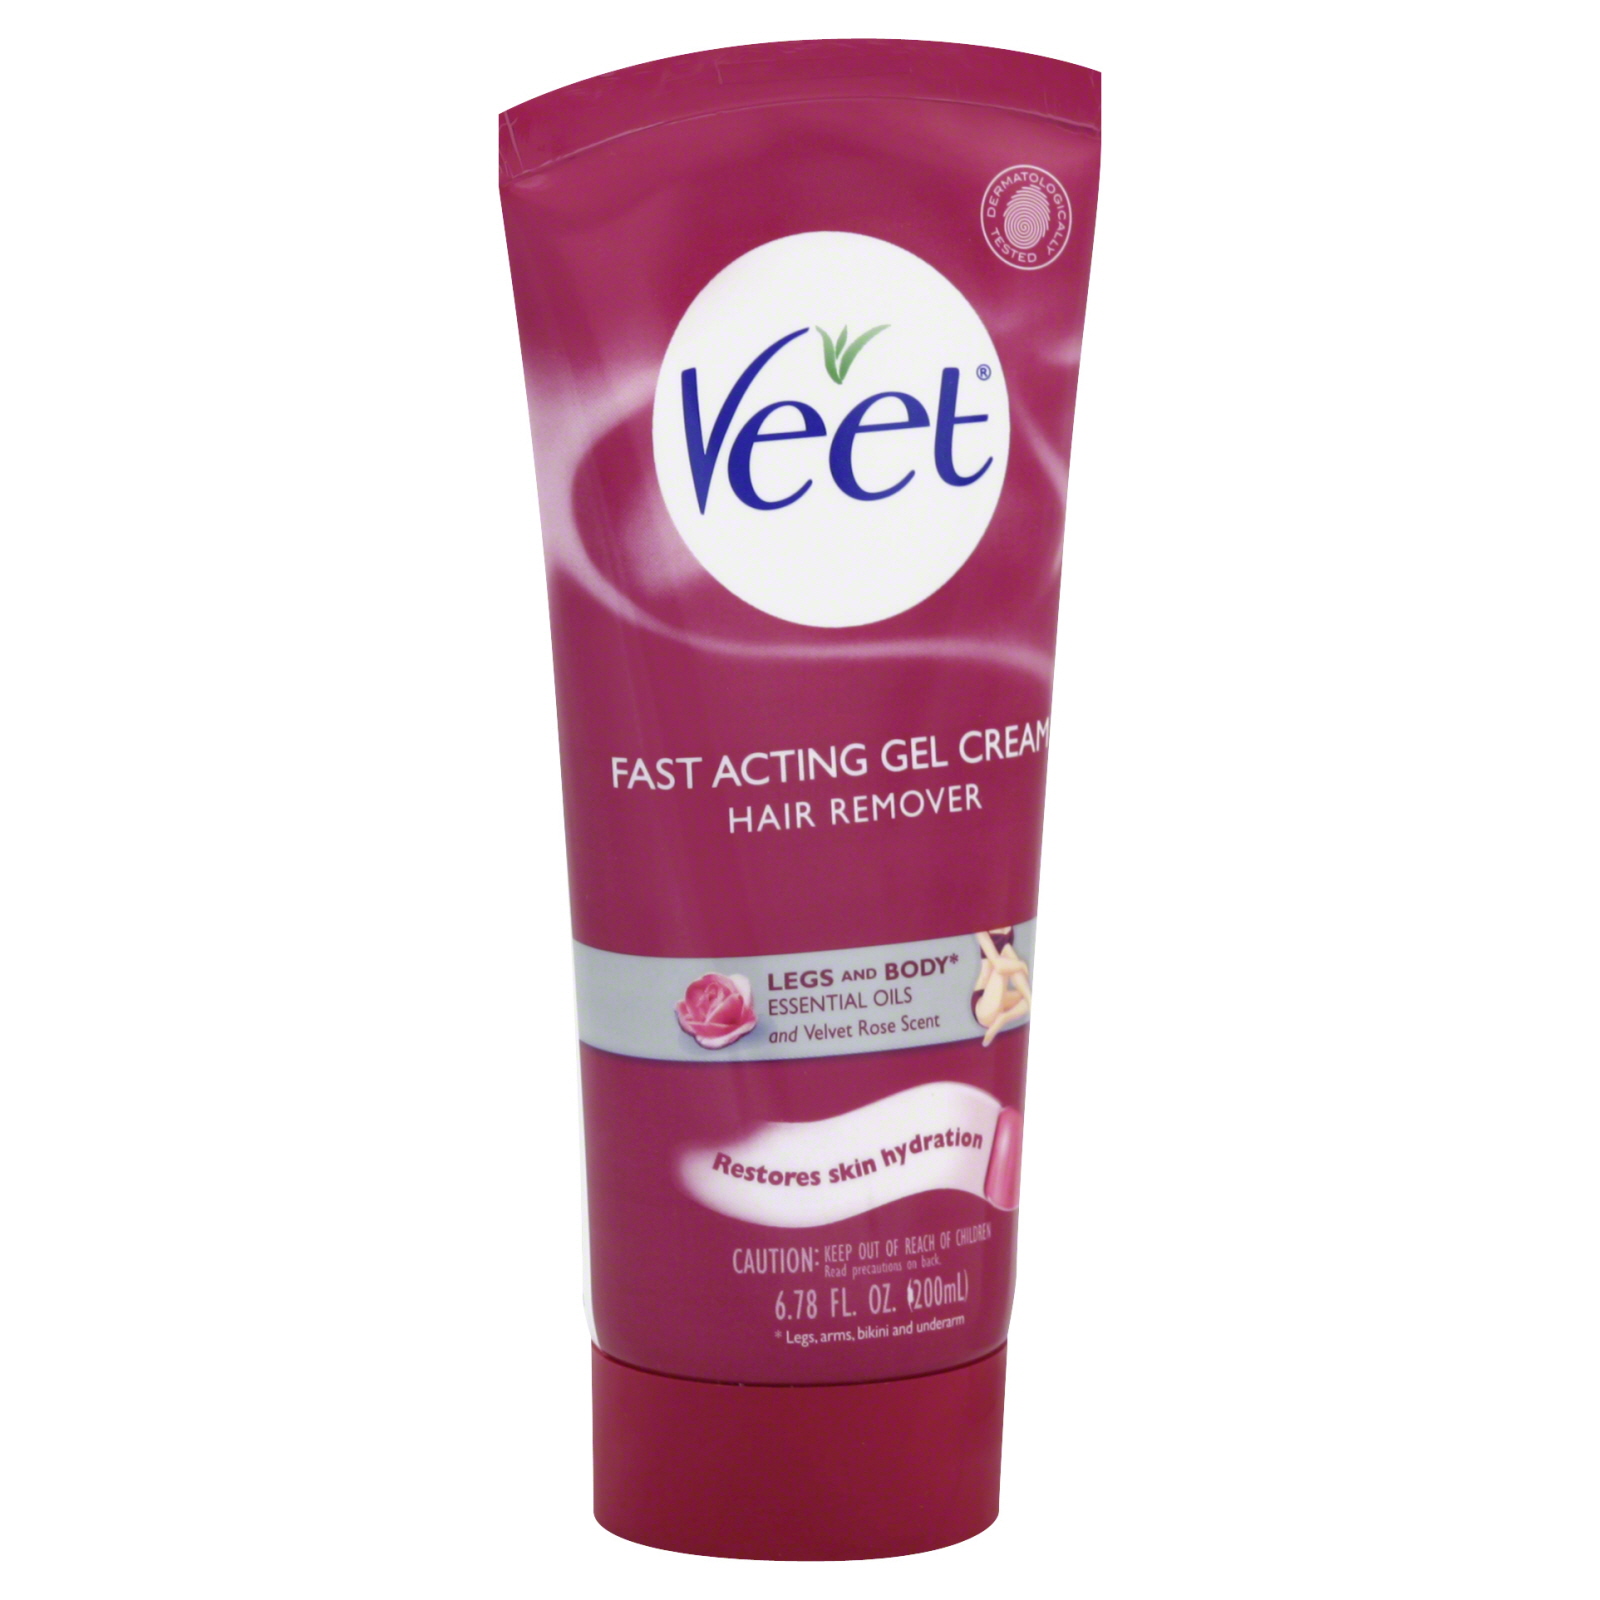 Veet Gel Cream Hair Remover With Essential Oils And Velvet Rose Scent, 6.78 oz.